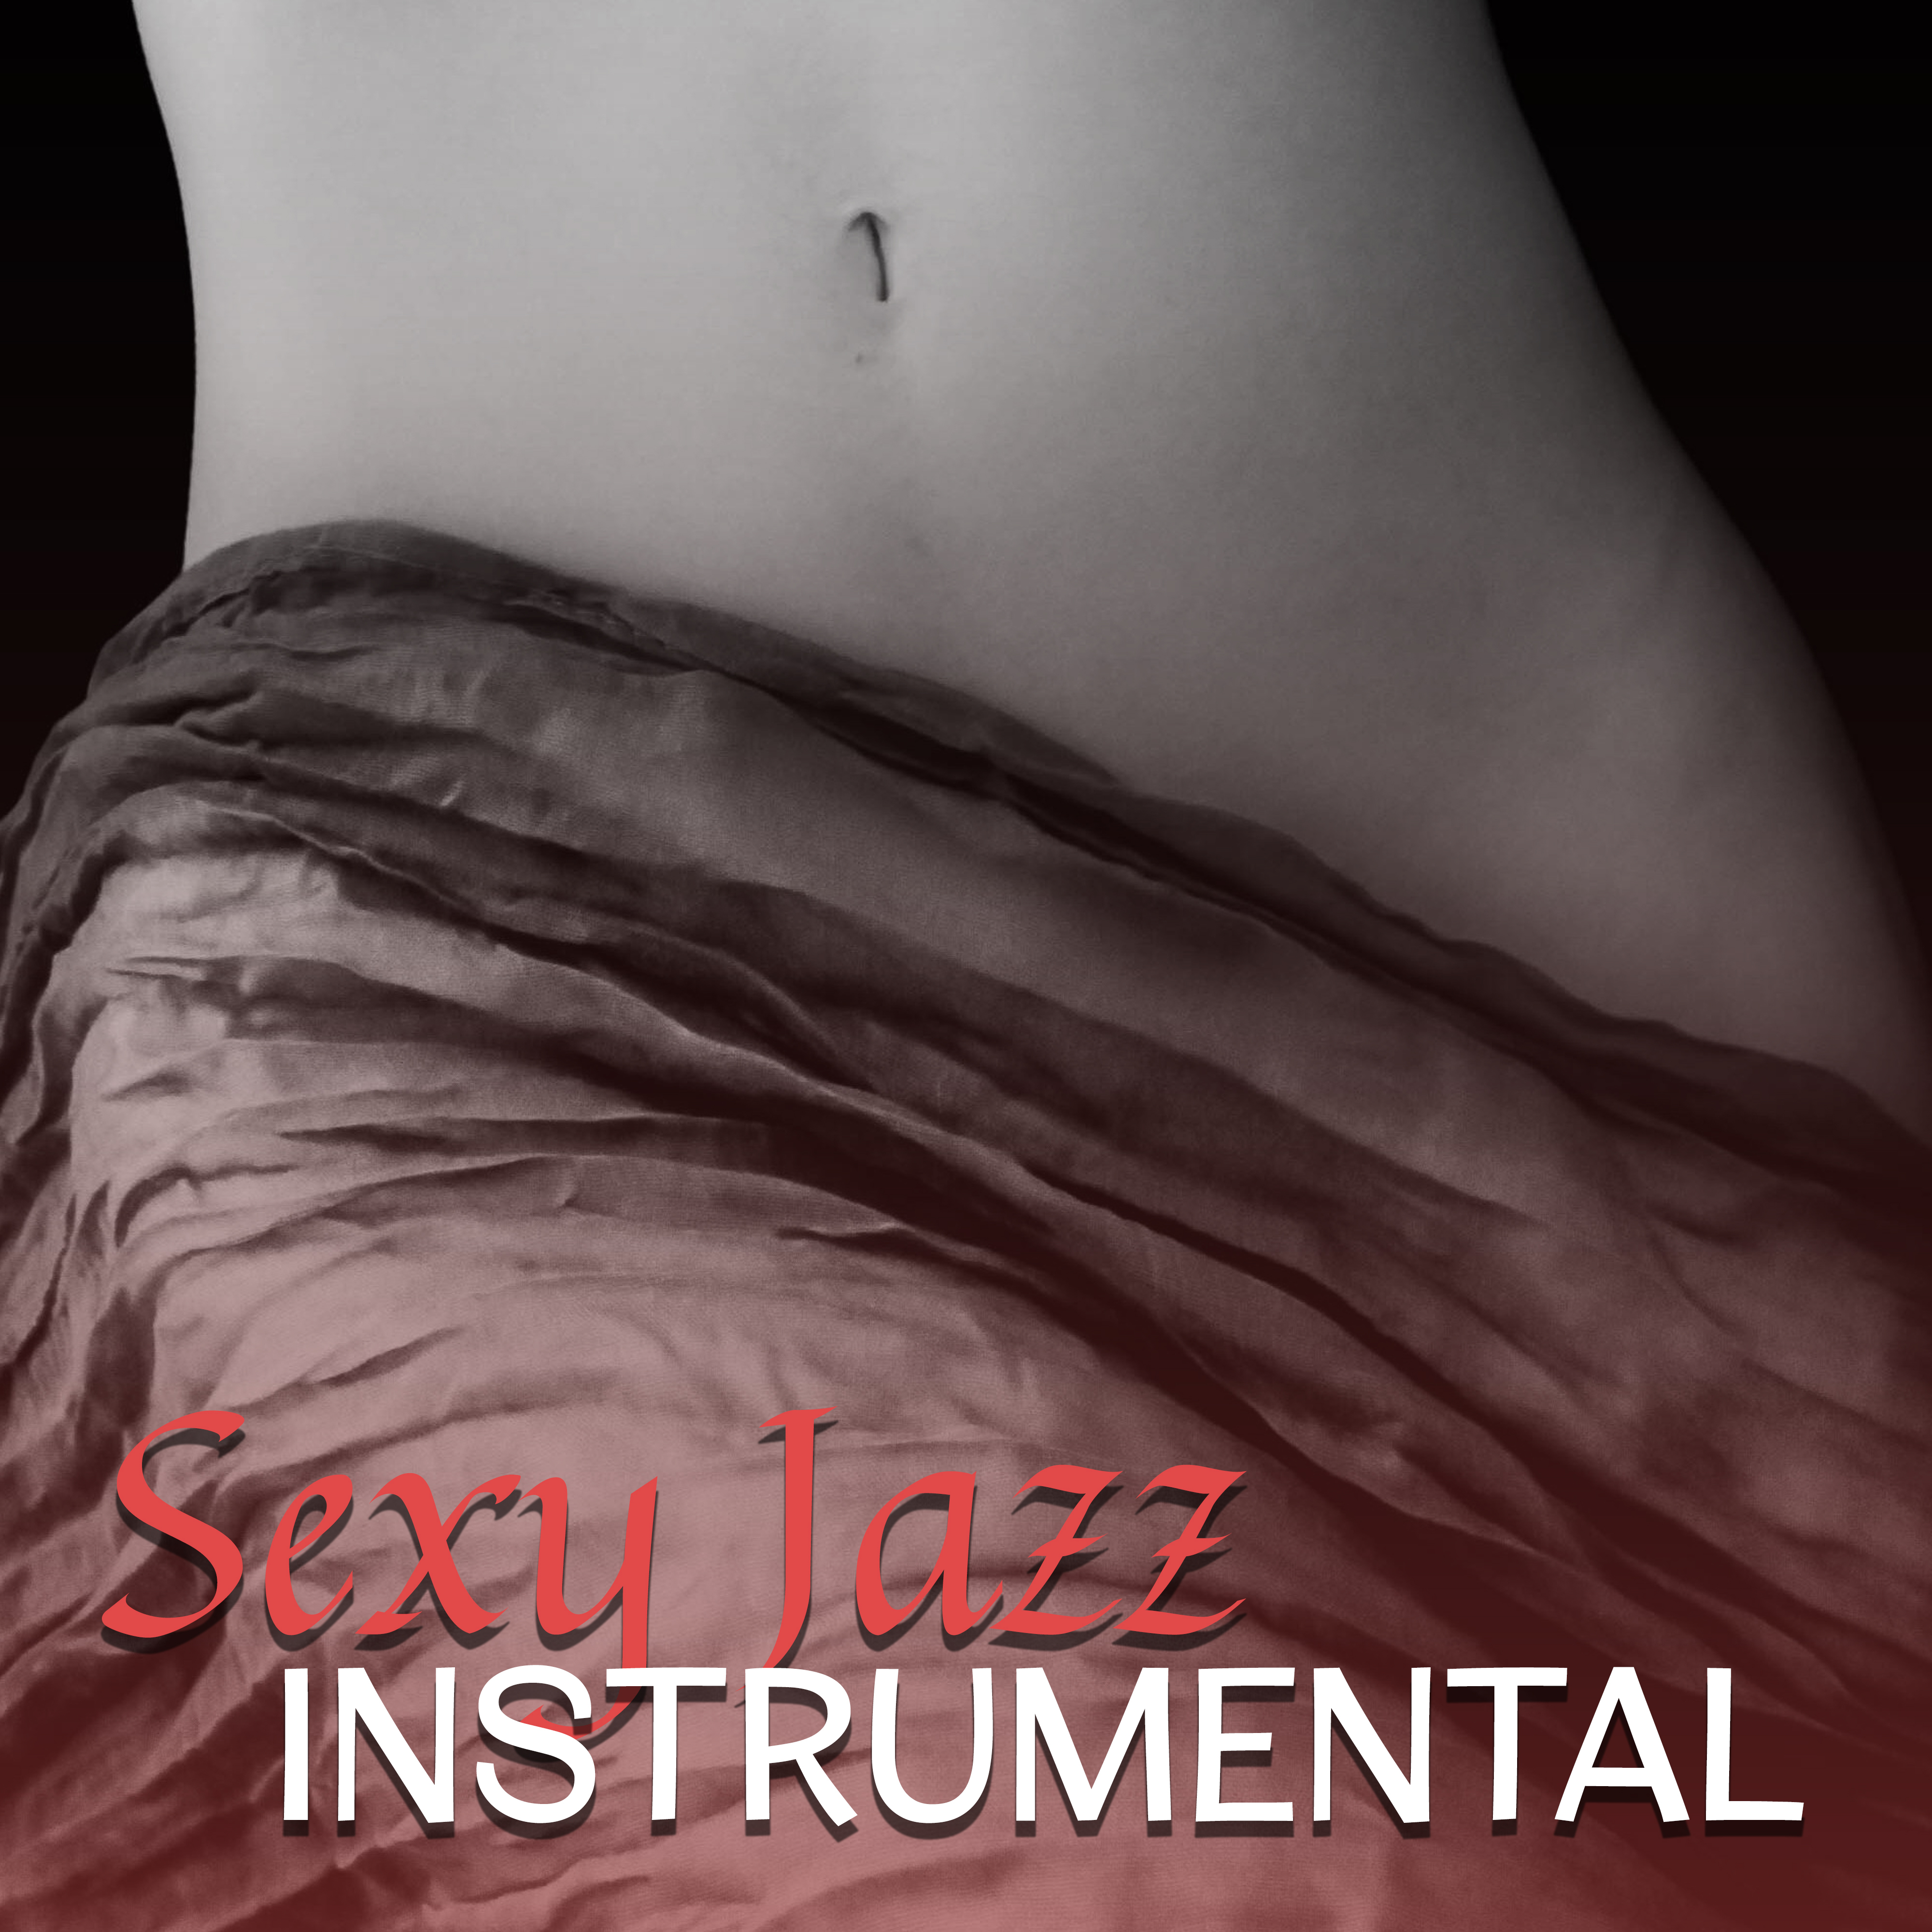 Sexy Jazz Instrumental  Sexy Jazz Lounge, Instrumental Music for Relaxation, Easy Listening